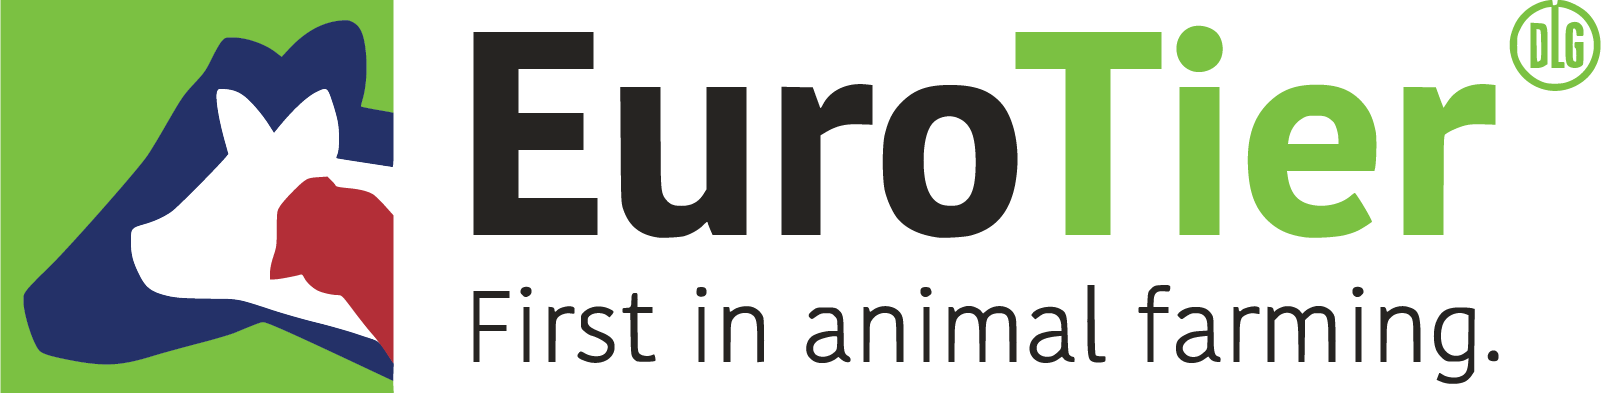 logo eurotier 2018